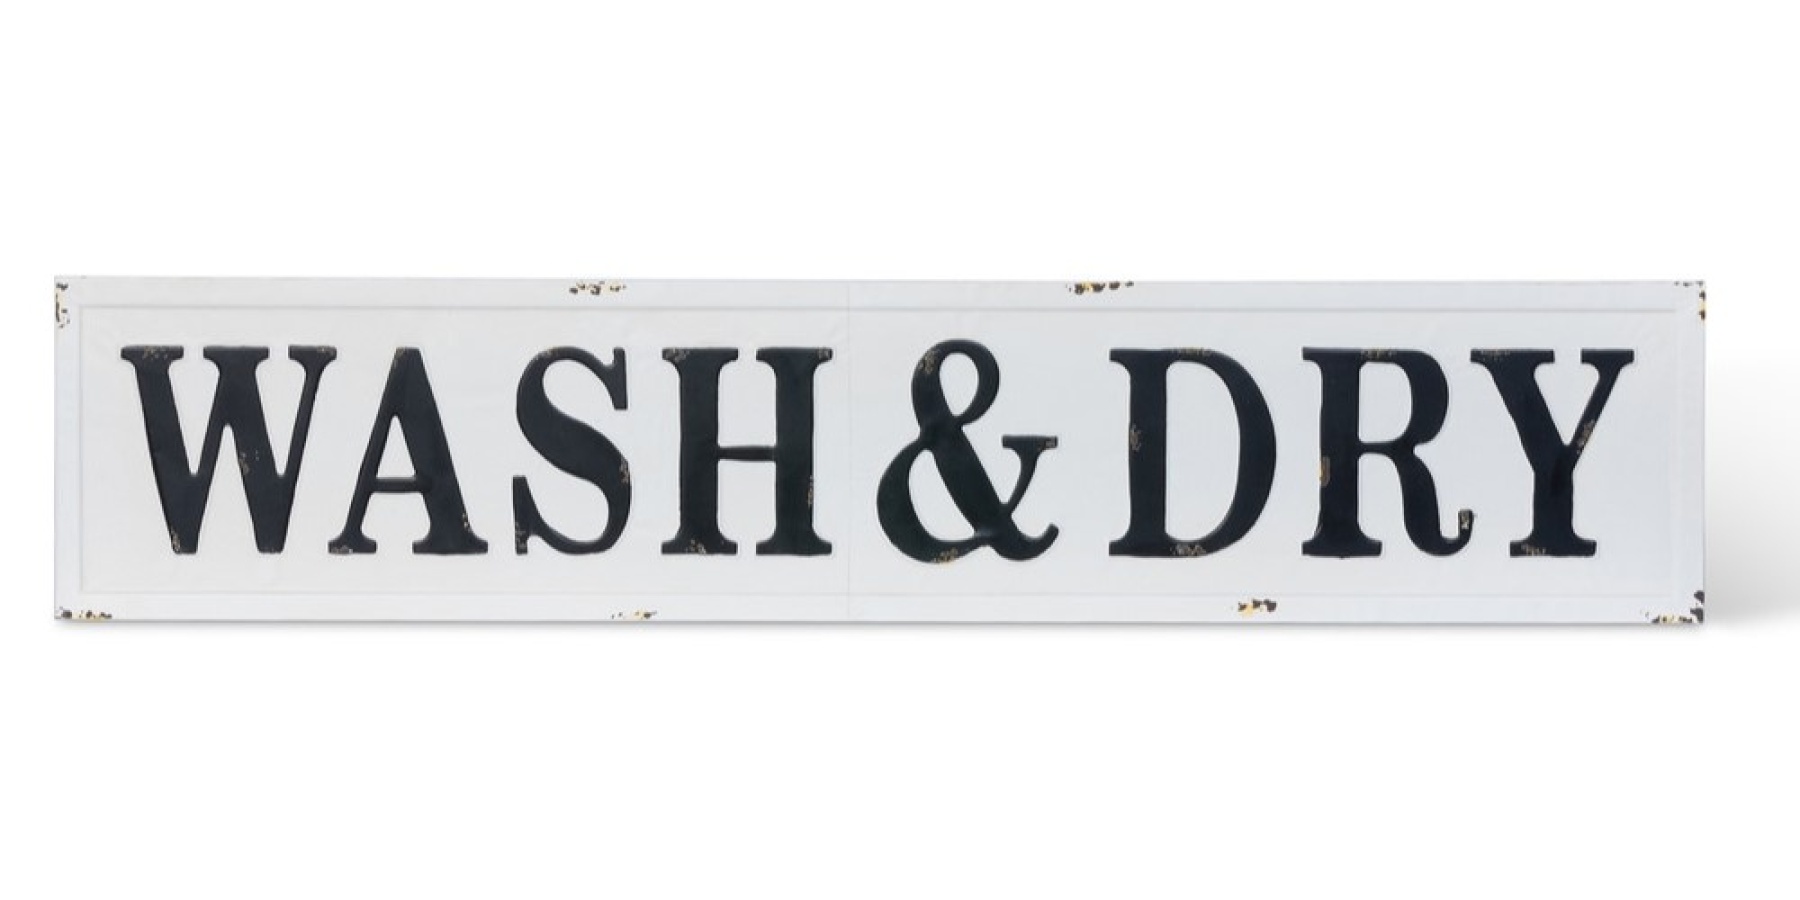 Metal Wash & Dry Sign